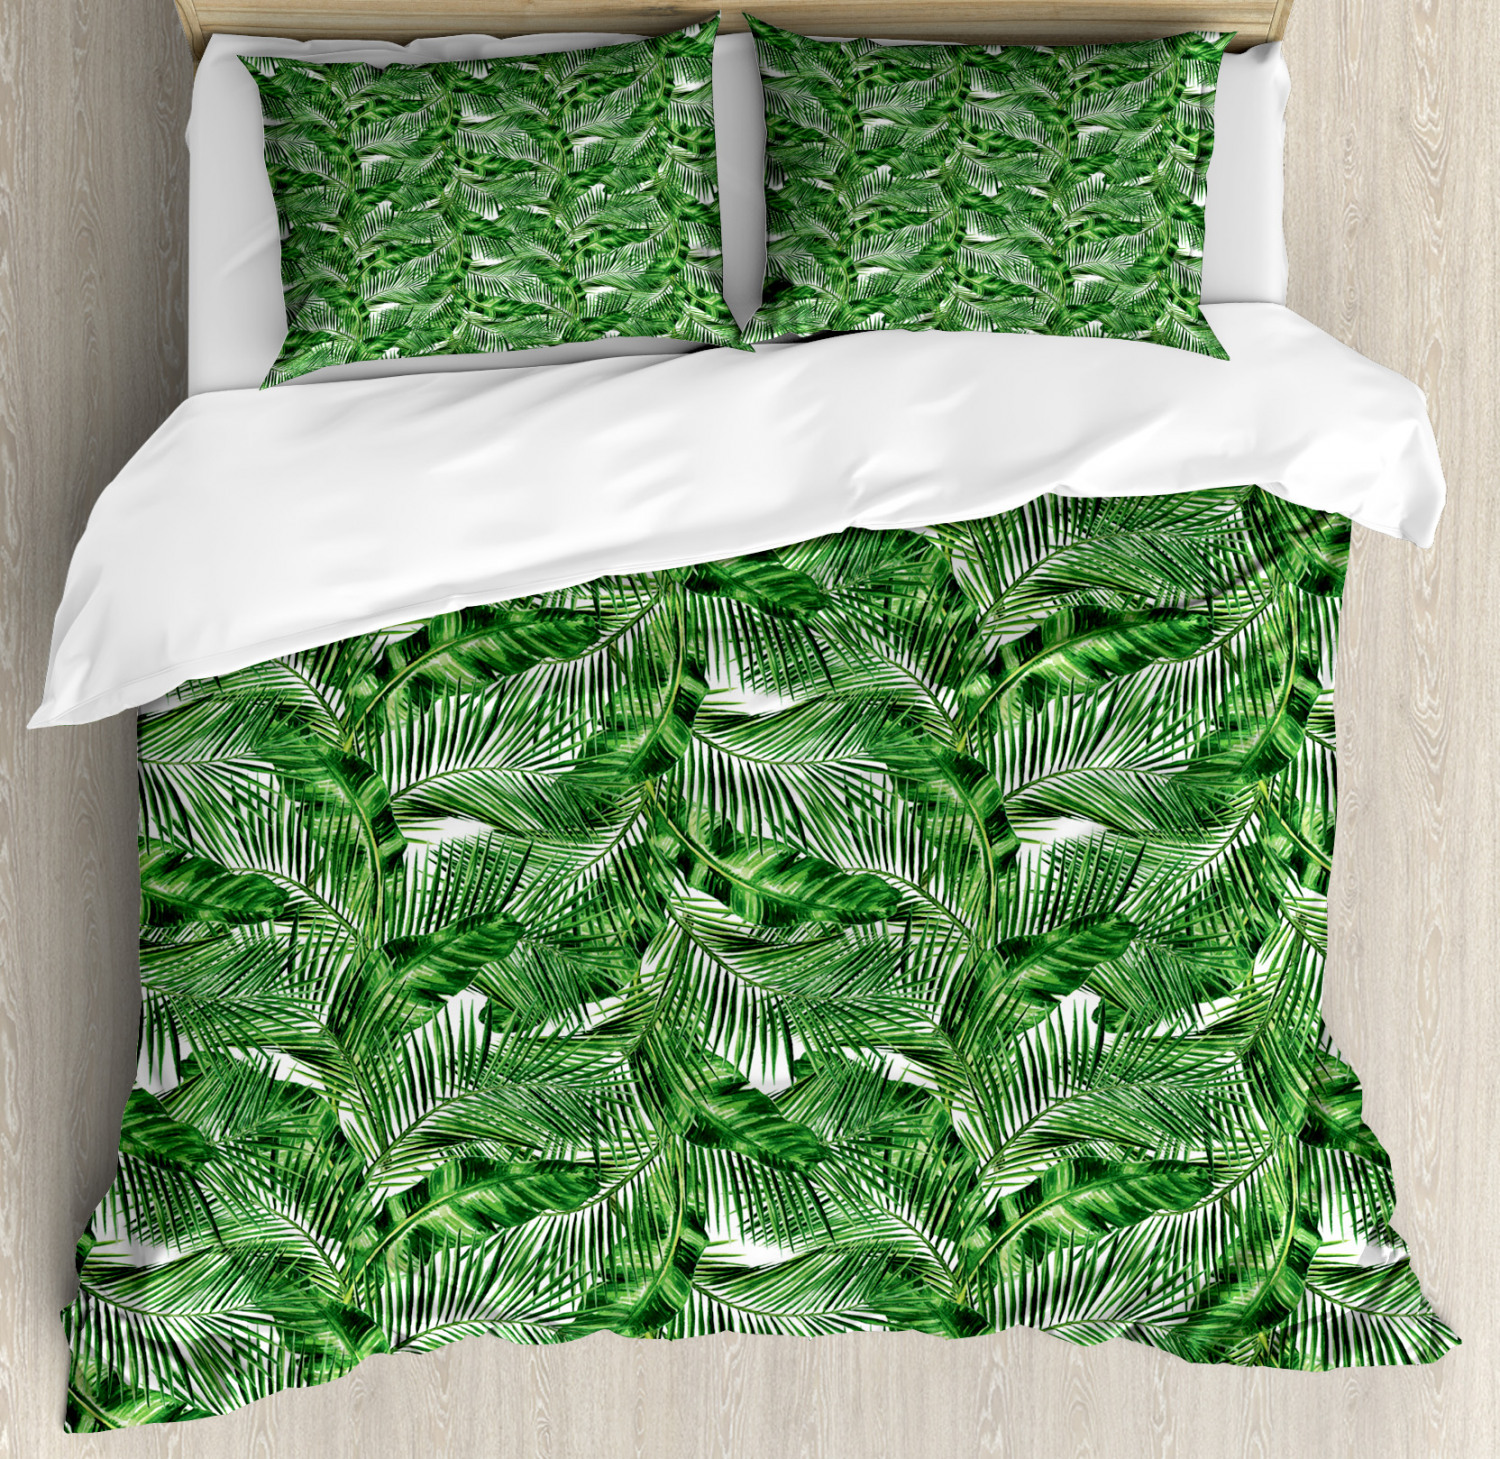 Zen Duvet Cover Set With Pillow Shams Tropic Plants Pattern Print